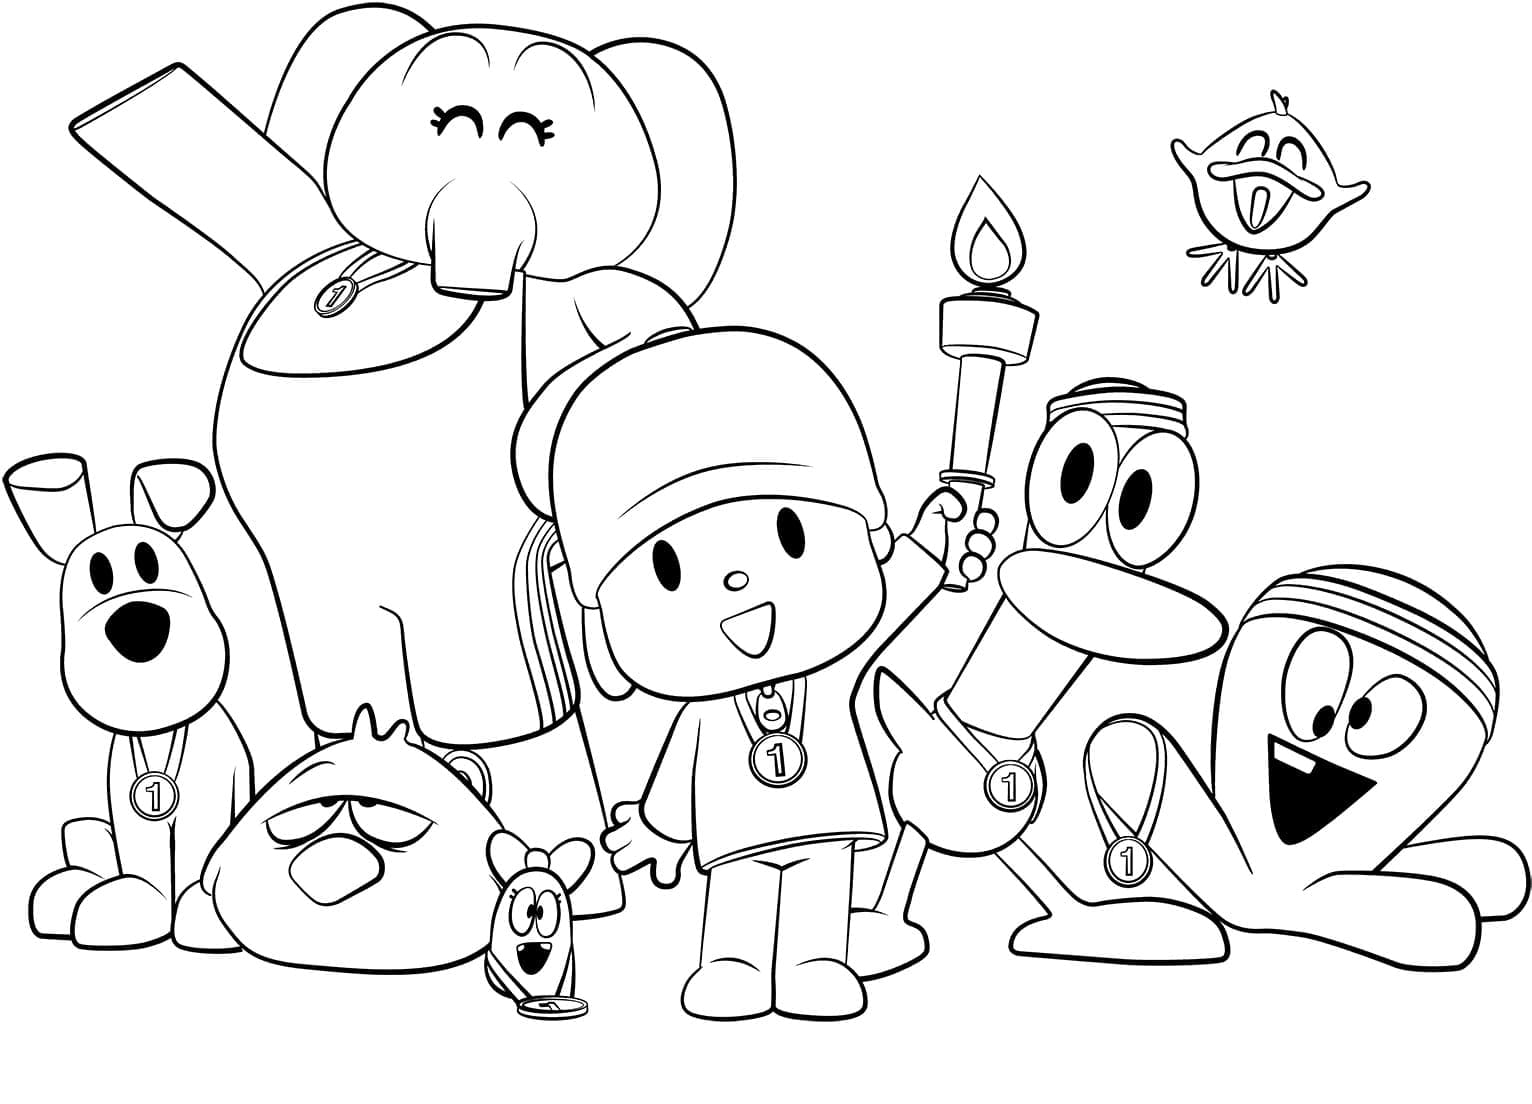 Pocoyo characters coloring page